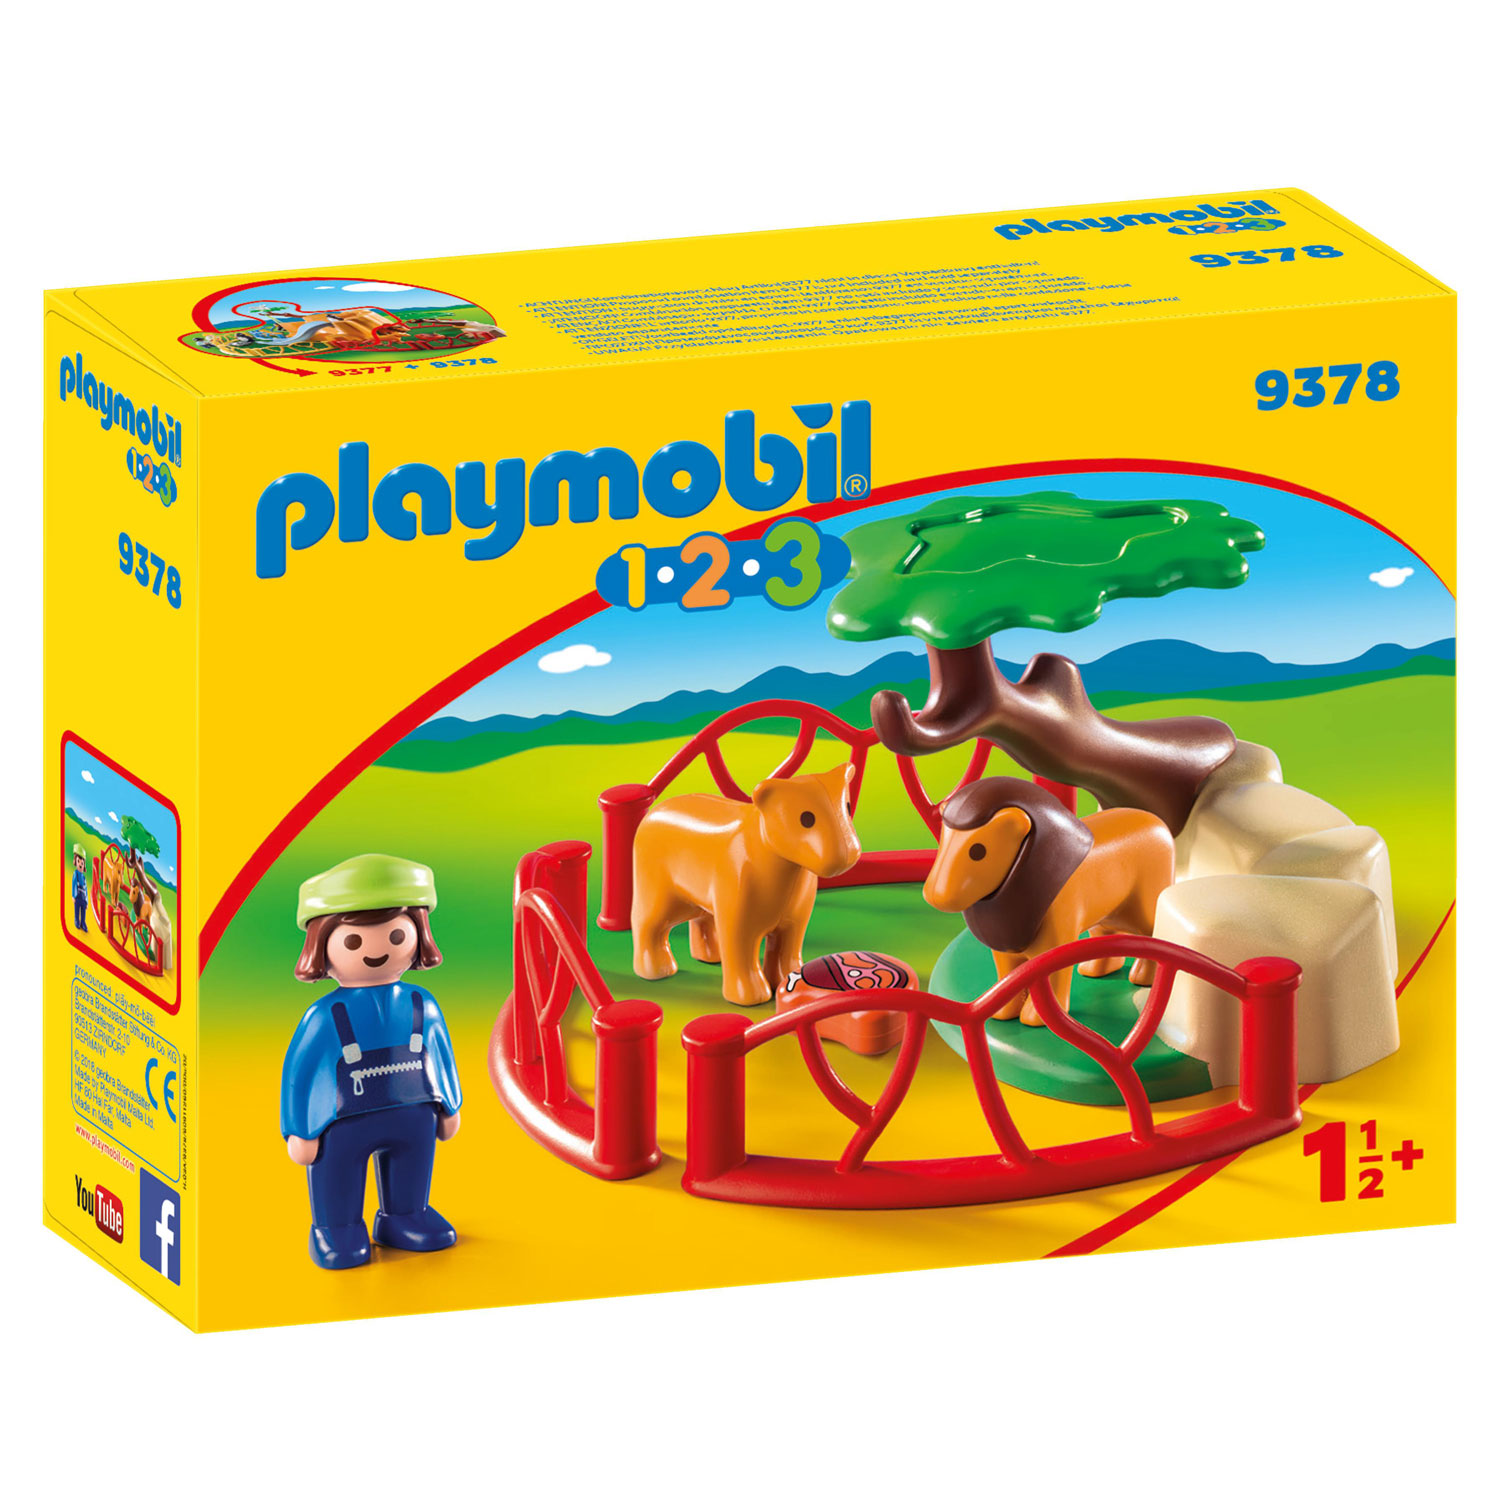 Playmobil 1.2.3. Leeuwenverblijf - 9378